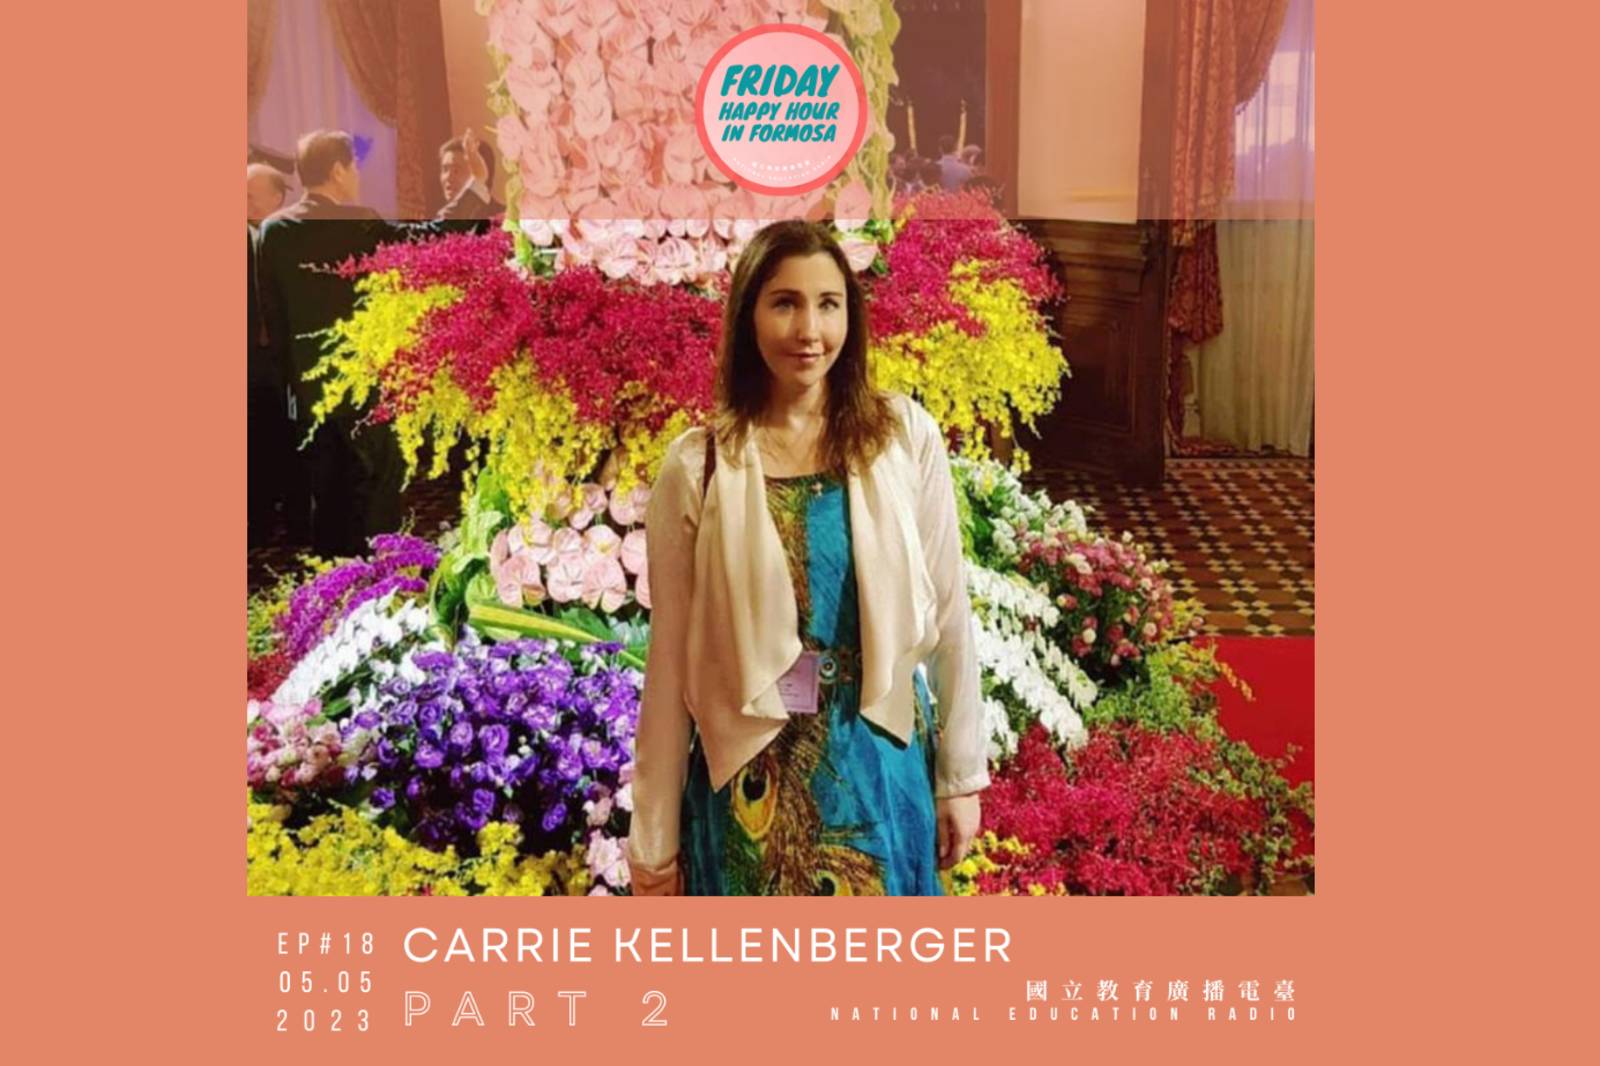 My Several Worlds 的慢性疾病及殘疾倡導者 Carrie Kellenberger - Part 2 * Disability Advocate Carrie Kellenberger of My Several Worlds - Part 2